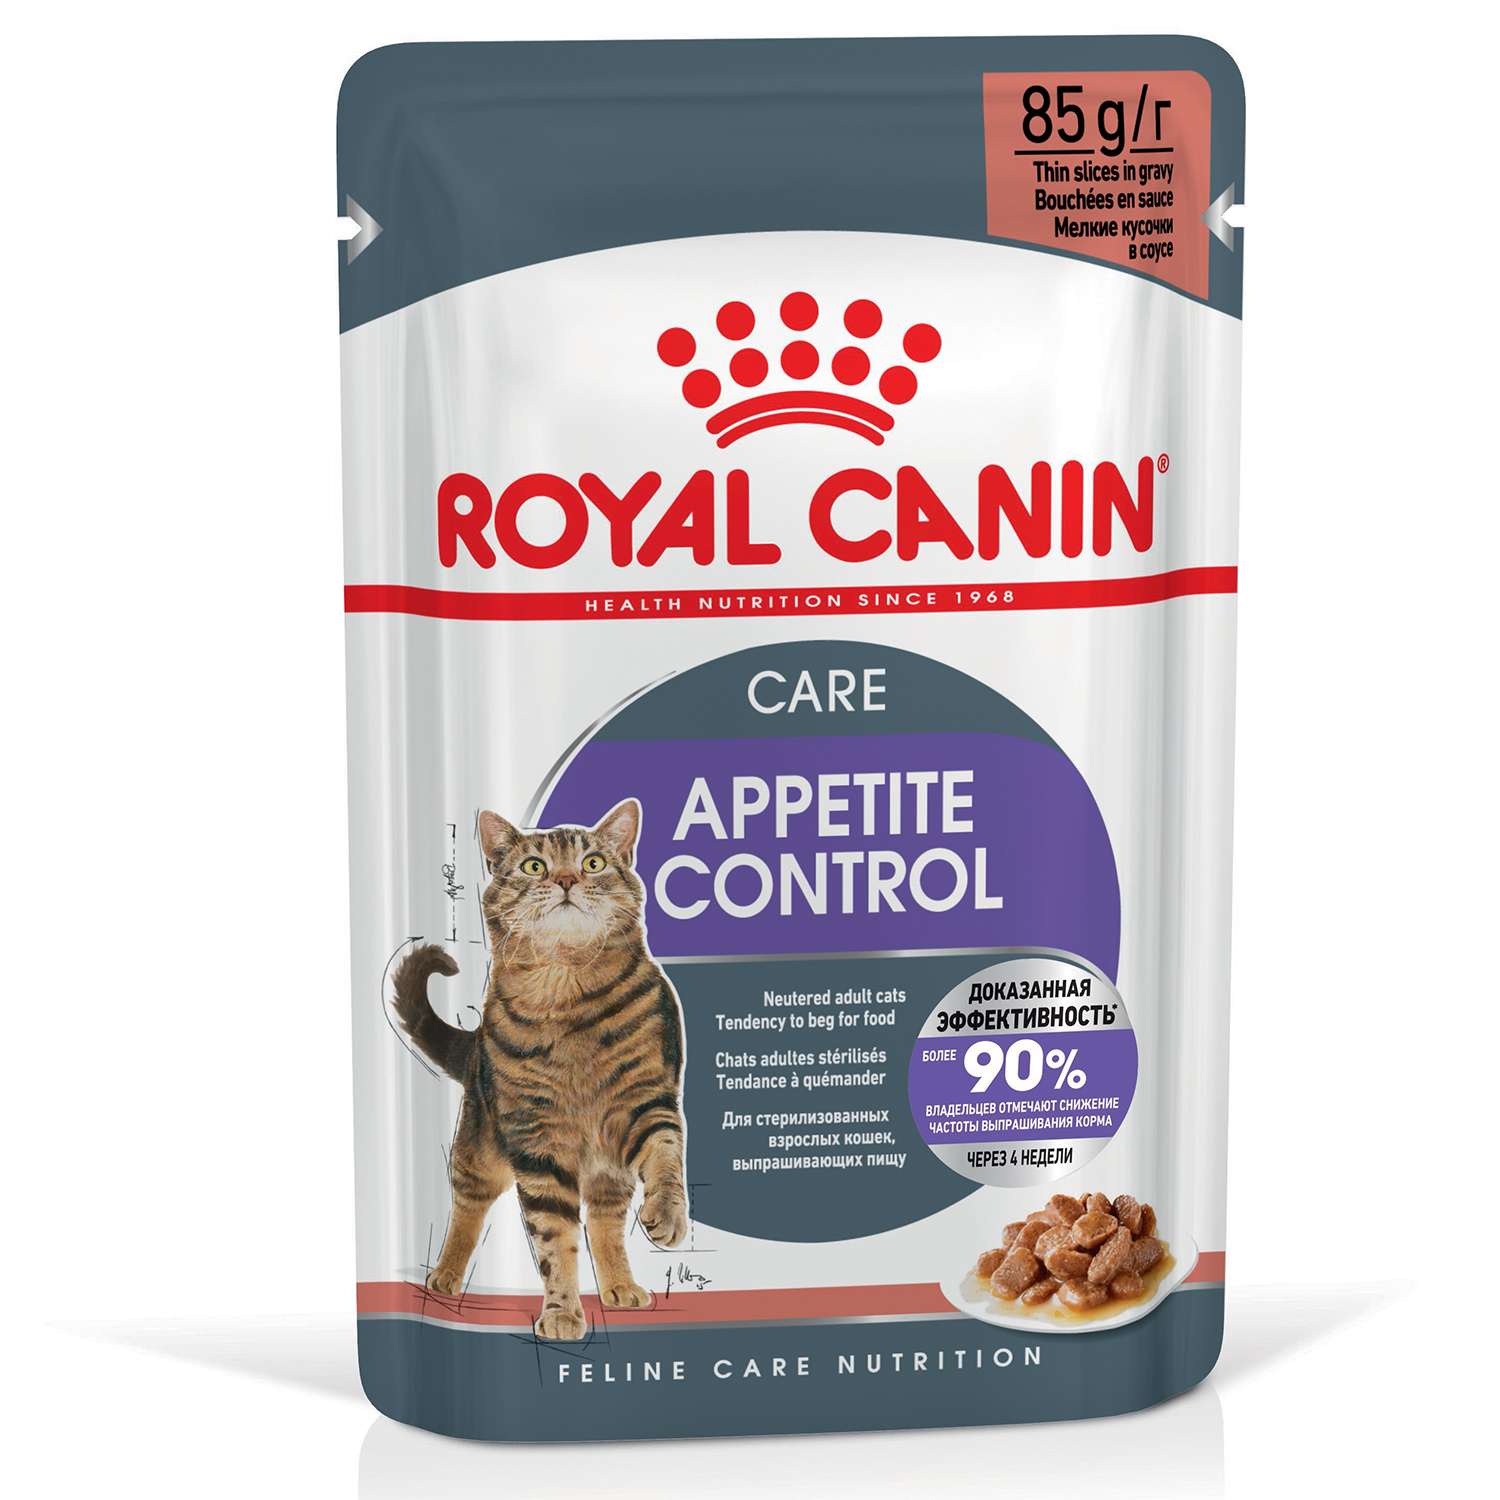 Корм для кошек ROYAL CANIN Appetite Control Care для контроля выпрашивания корма соус пауч 85г - фото 2